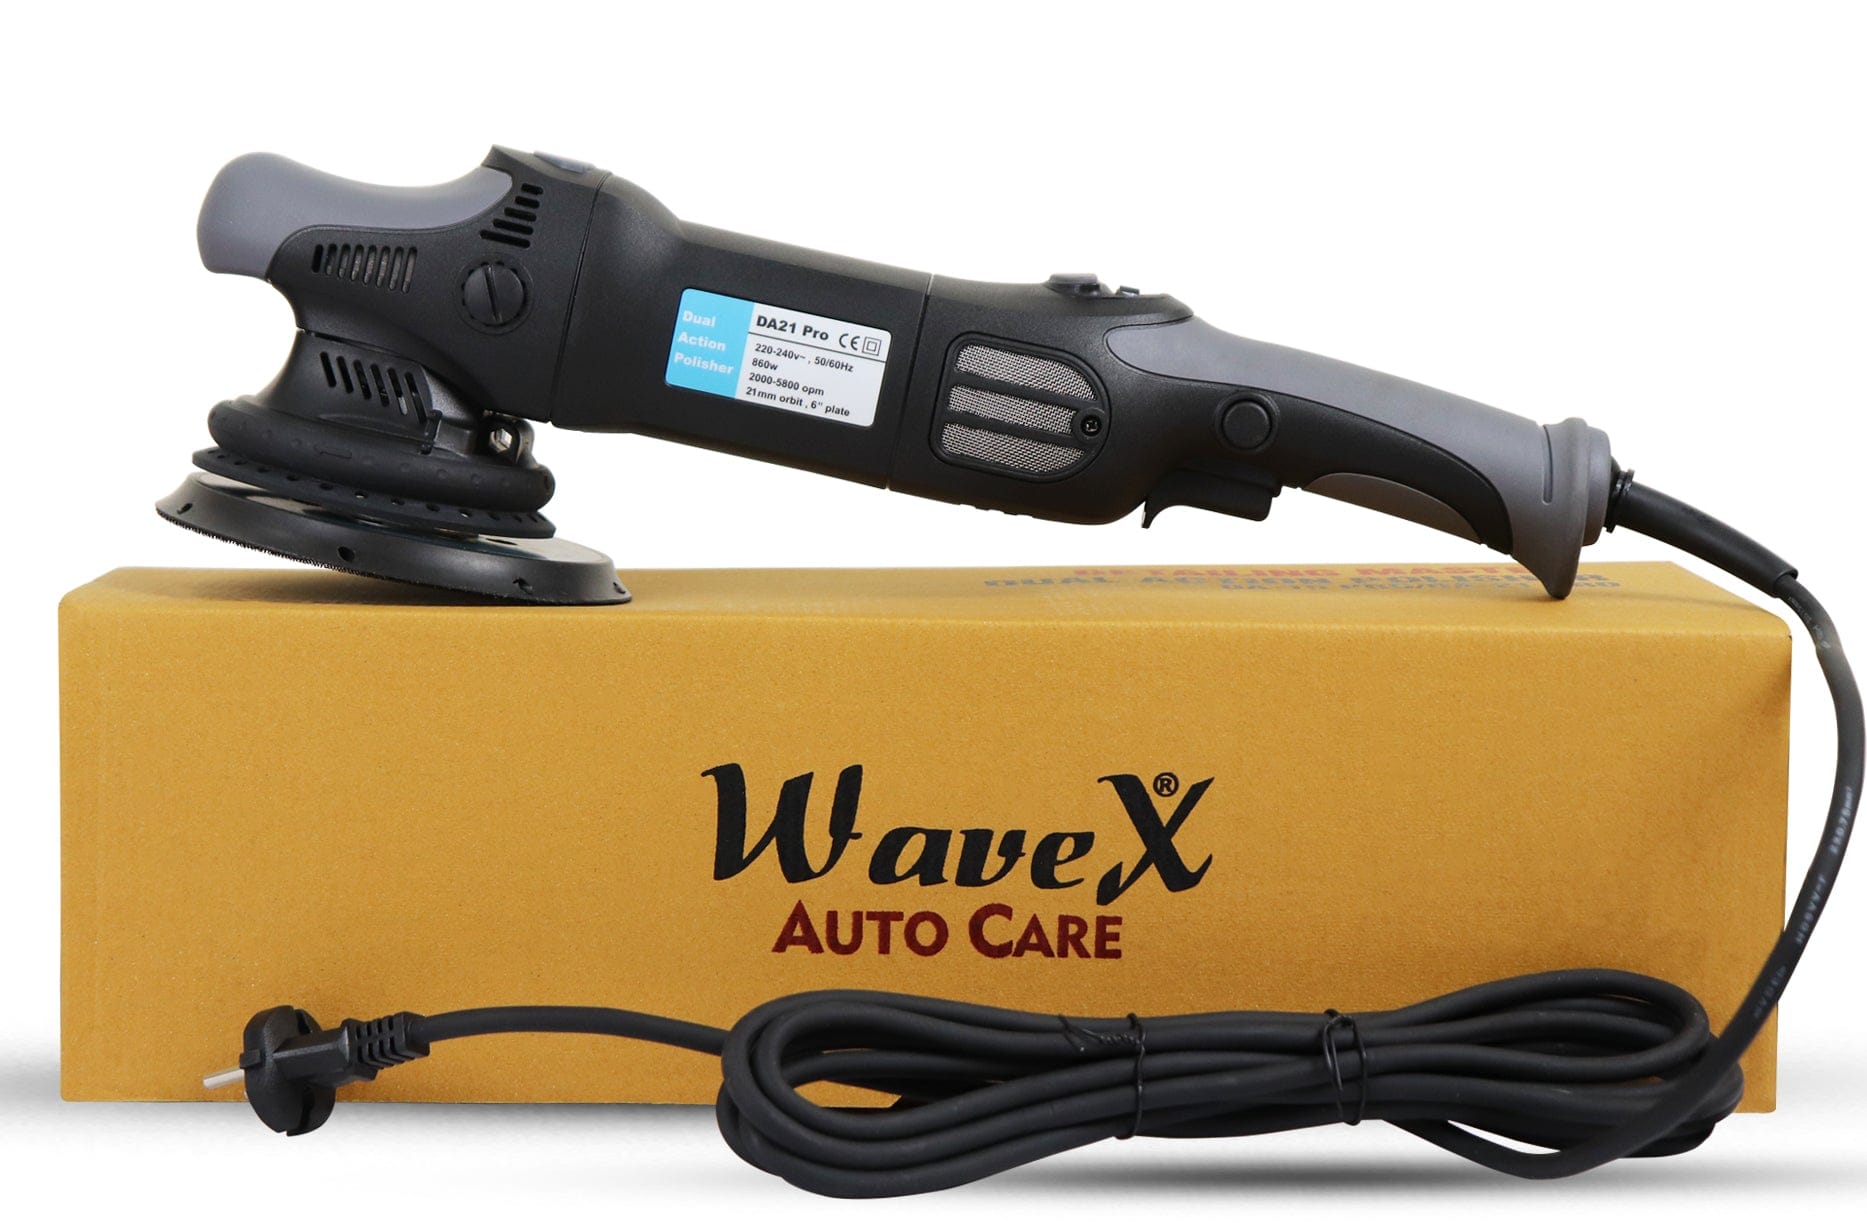 Wavex Detailing Master, Dual Action Polisher Machine for Car Detailing